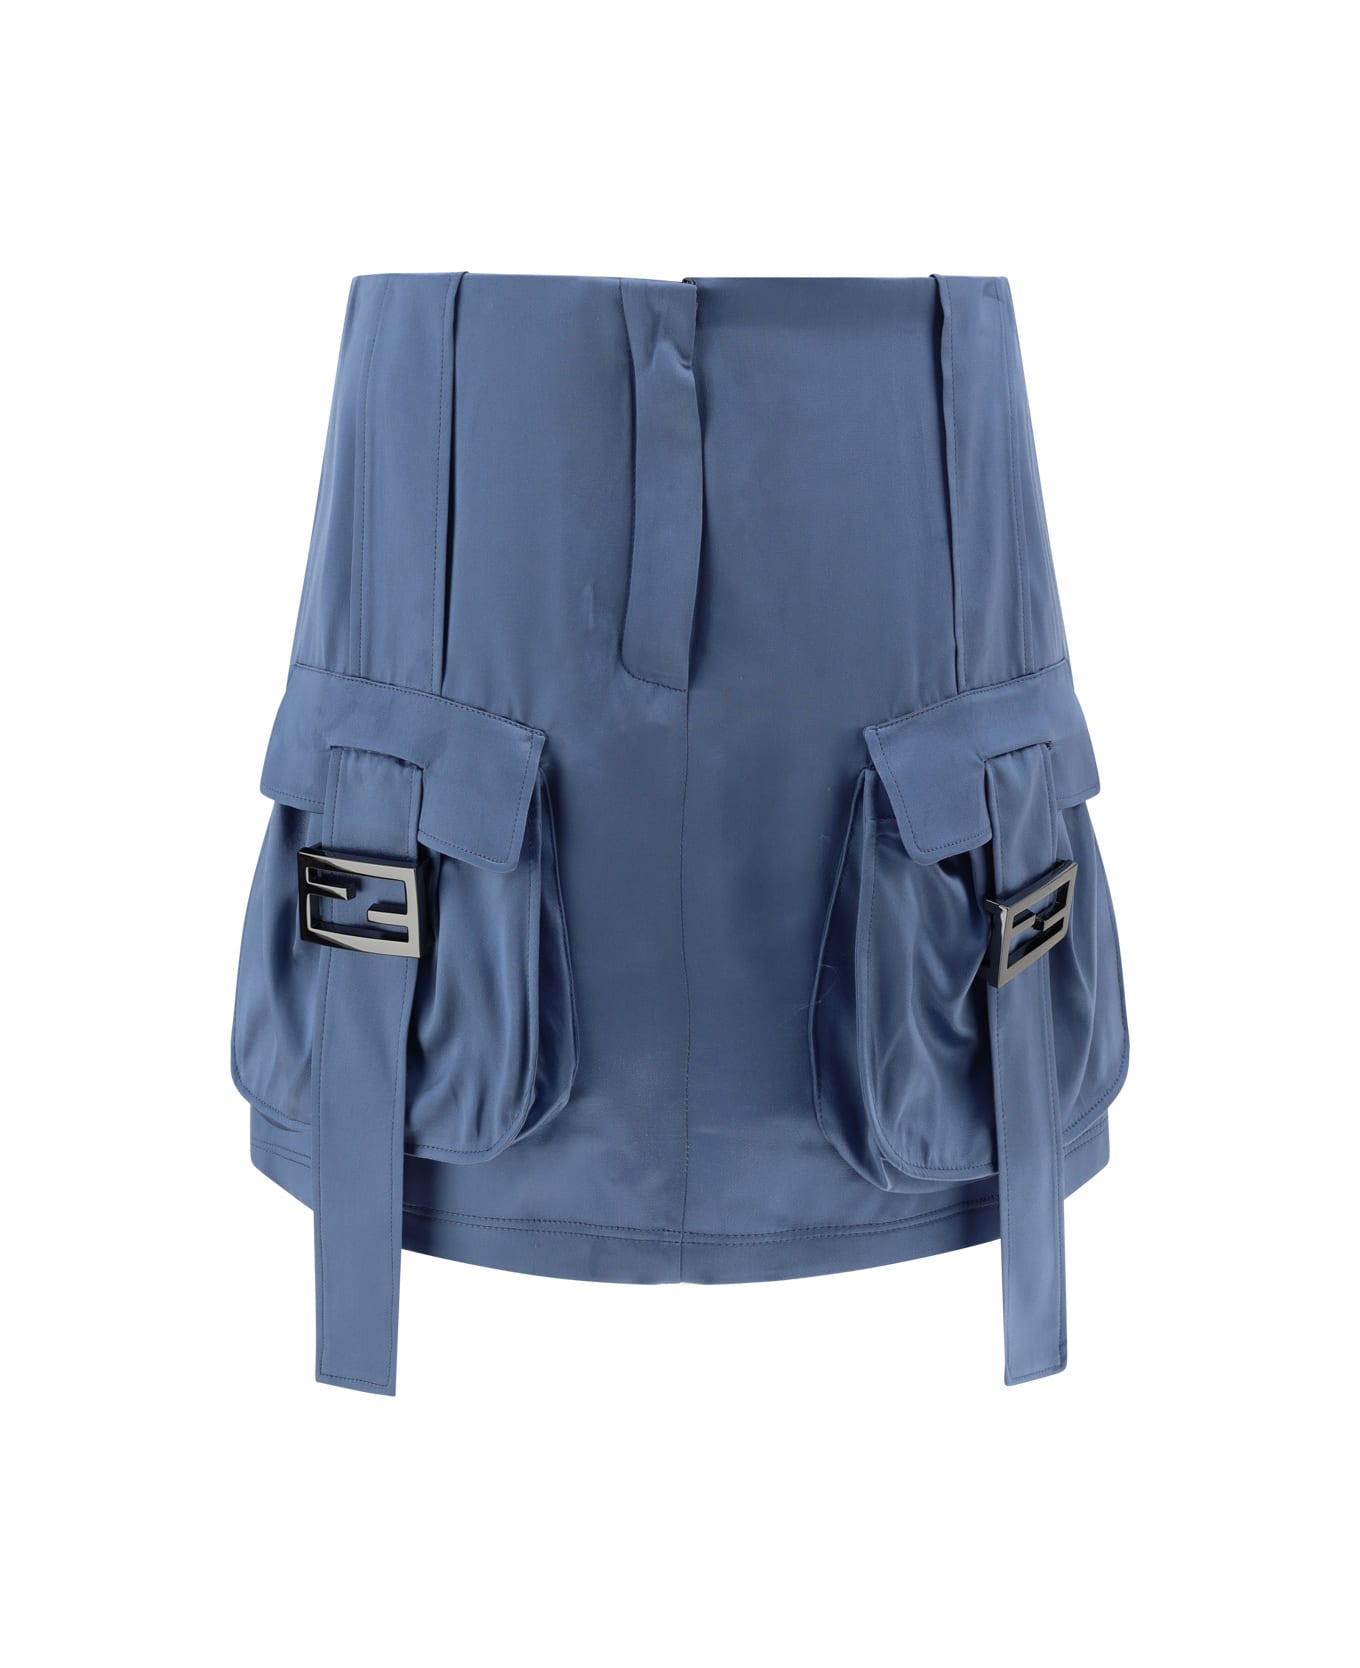 Fendi Satin Miniskirt - Perfect スカート